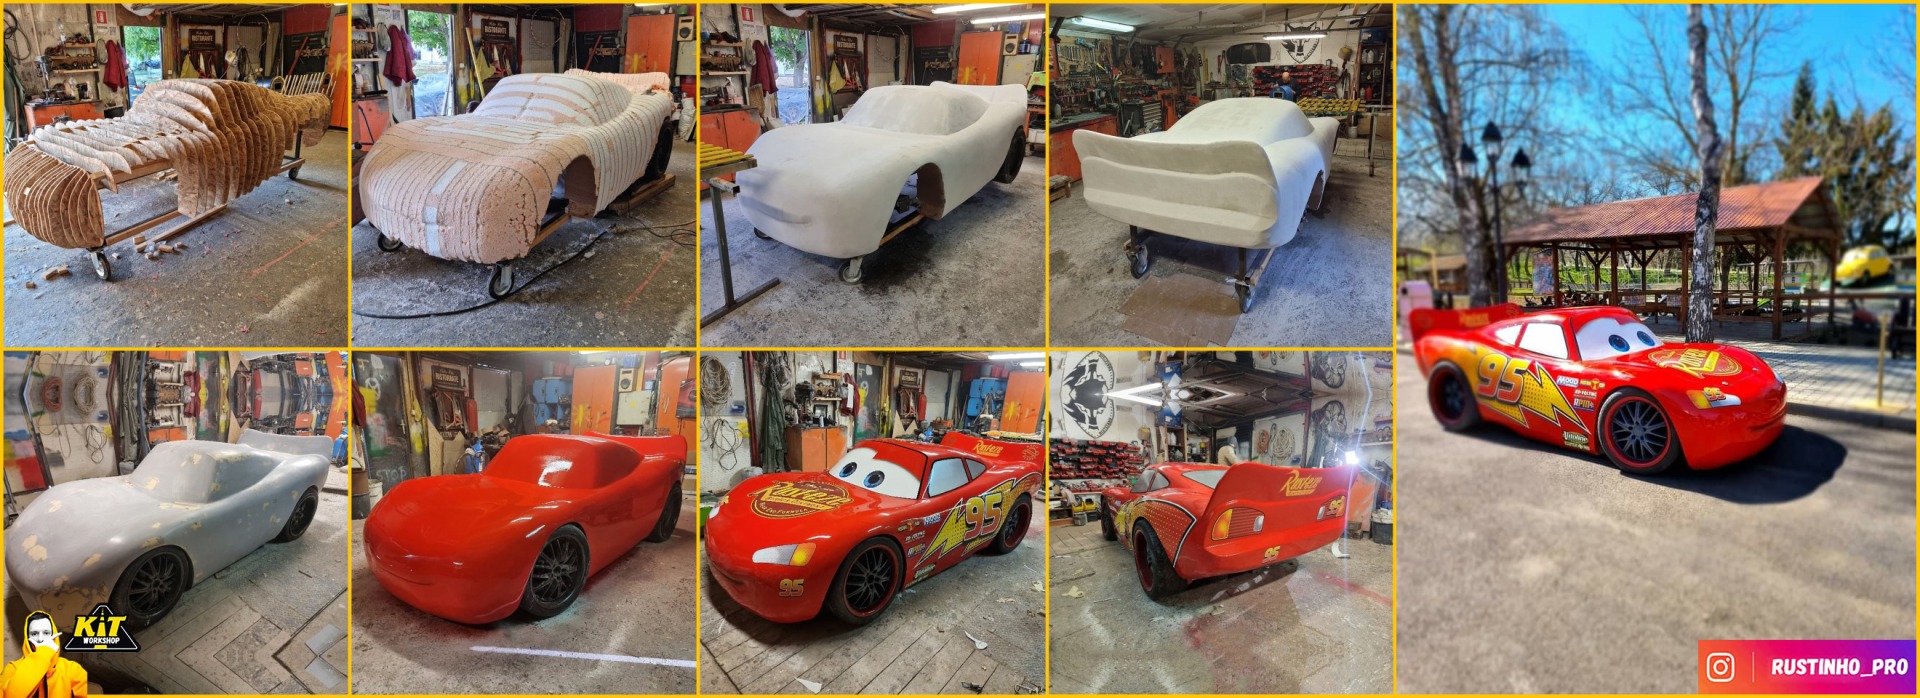 Lightning McQueen replica from car buck files